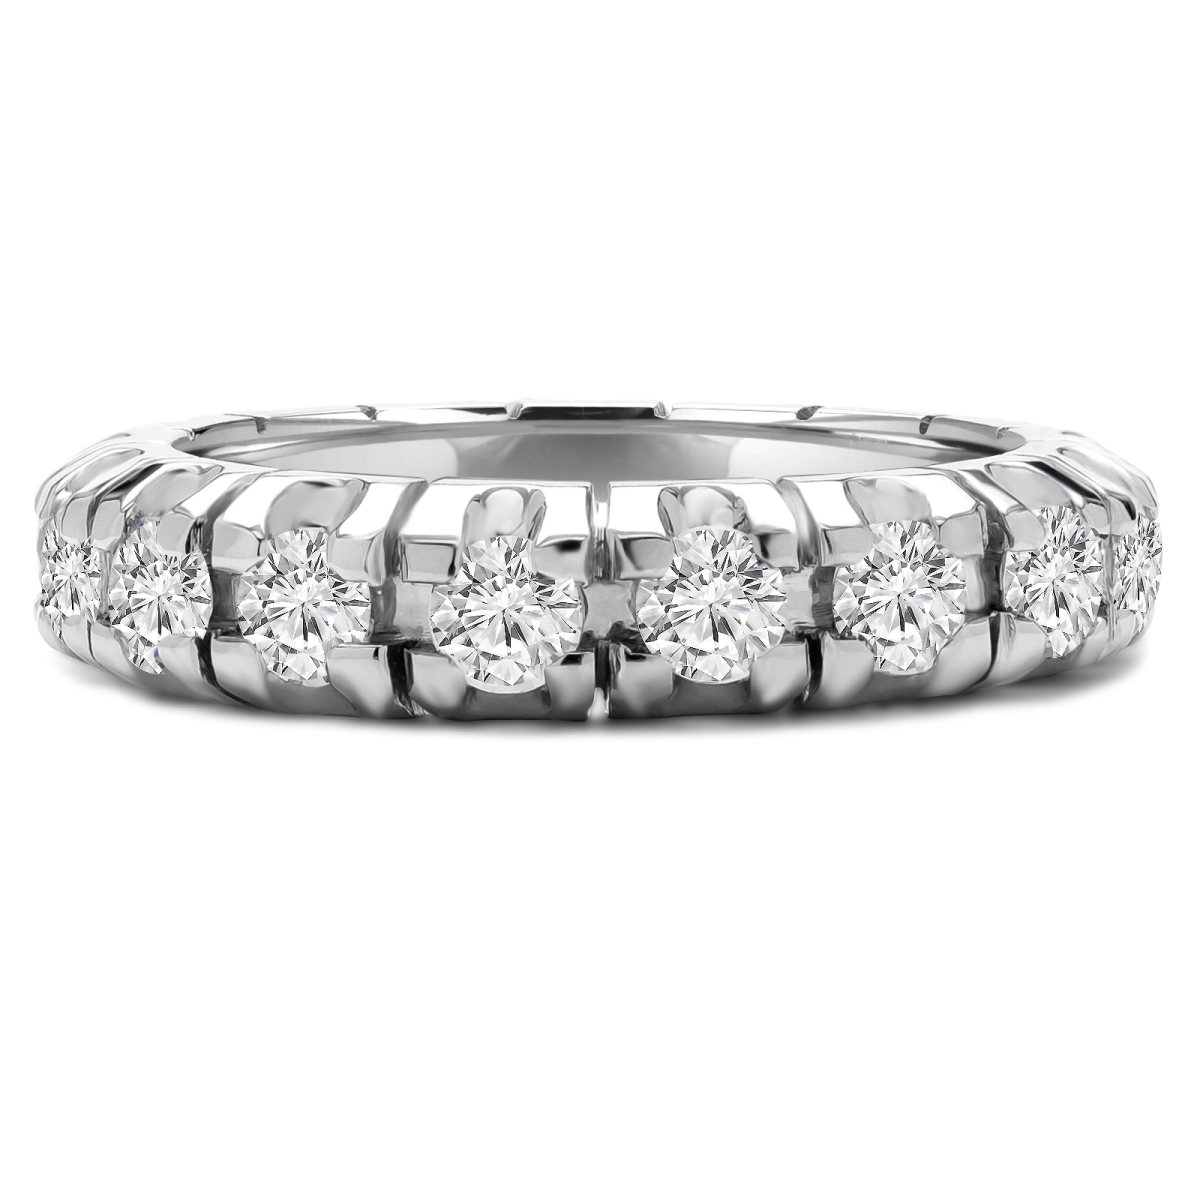 Majesty Diamonds MD210319-4 3.33 CTW Round Diamond Full-Eternity Anniversary Wedding Band Ring in 18K White Gold - Size 4